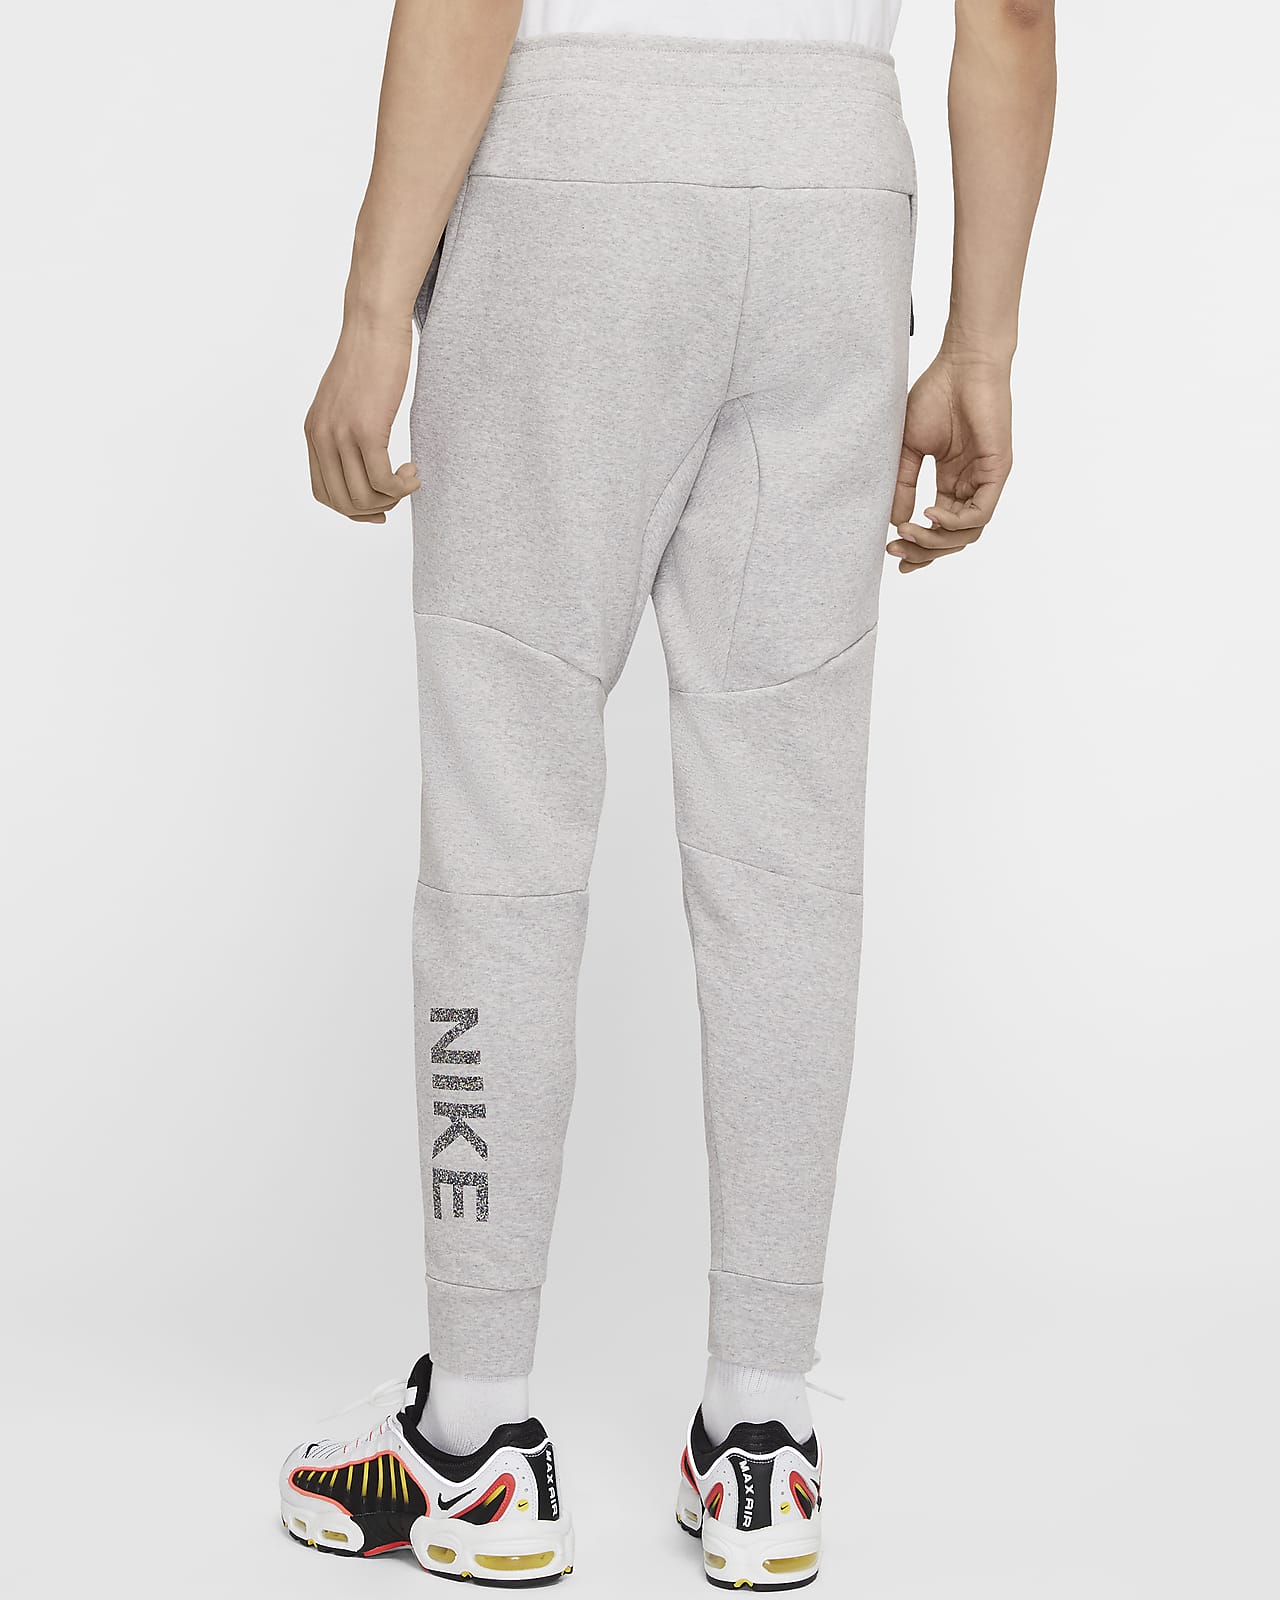 nike sportswear joggers grey